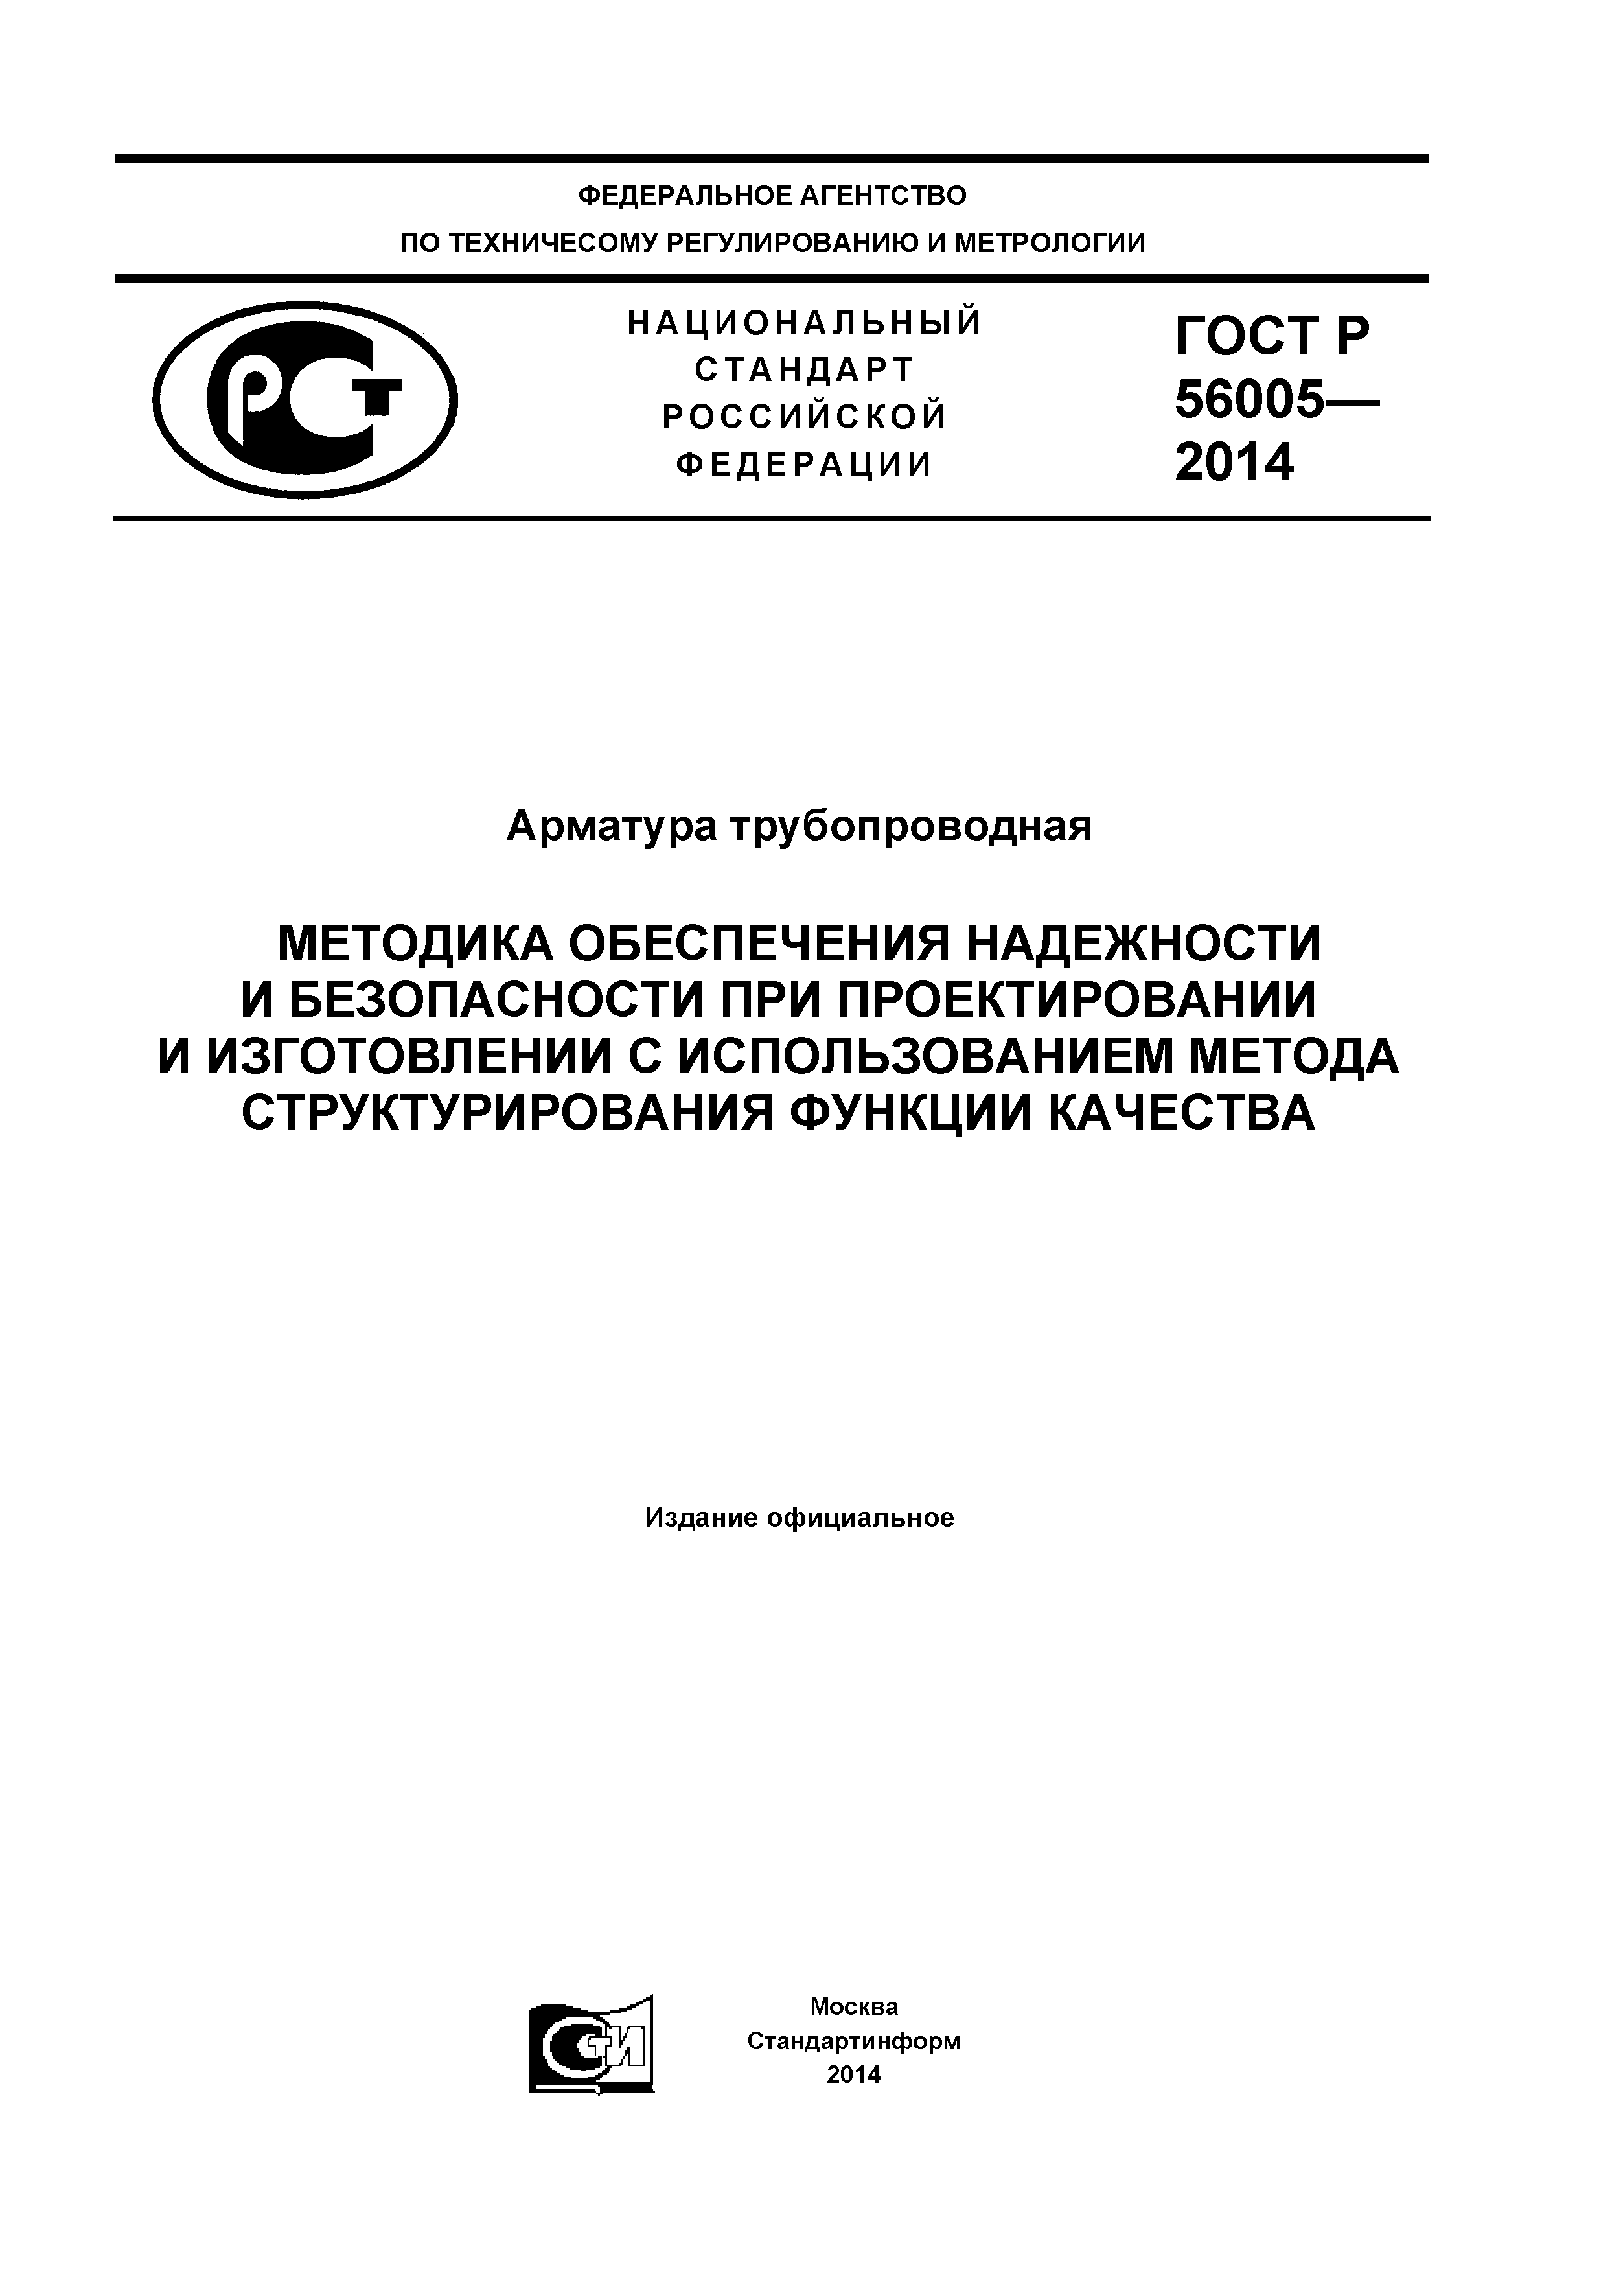 ГОСТ Р 56005-2014